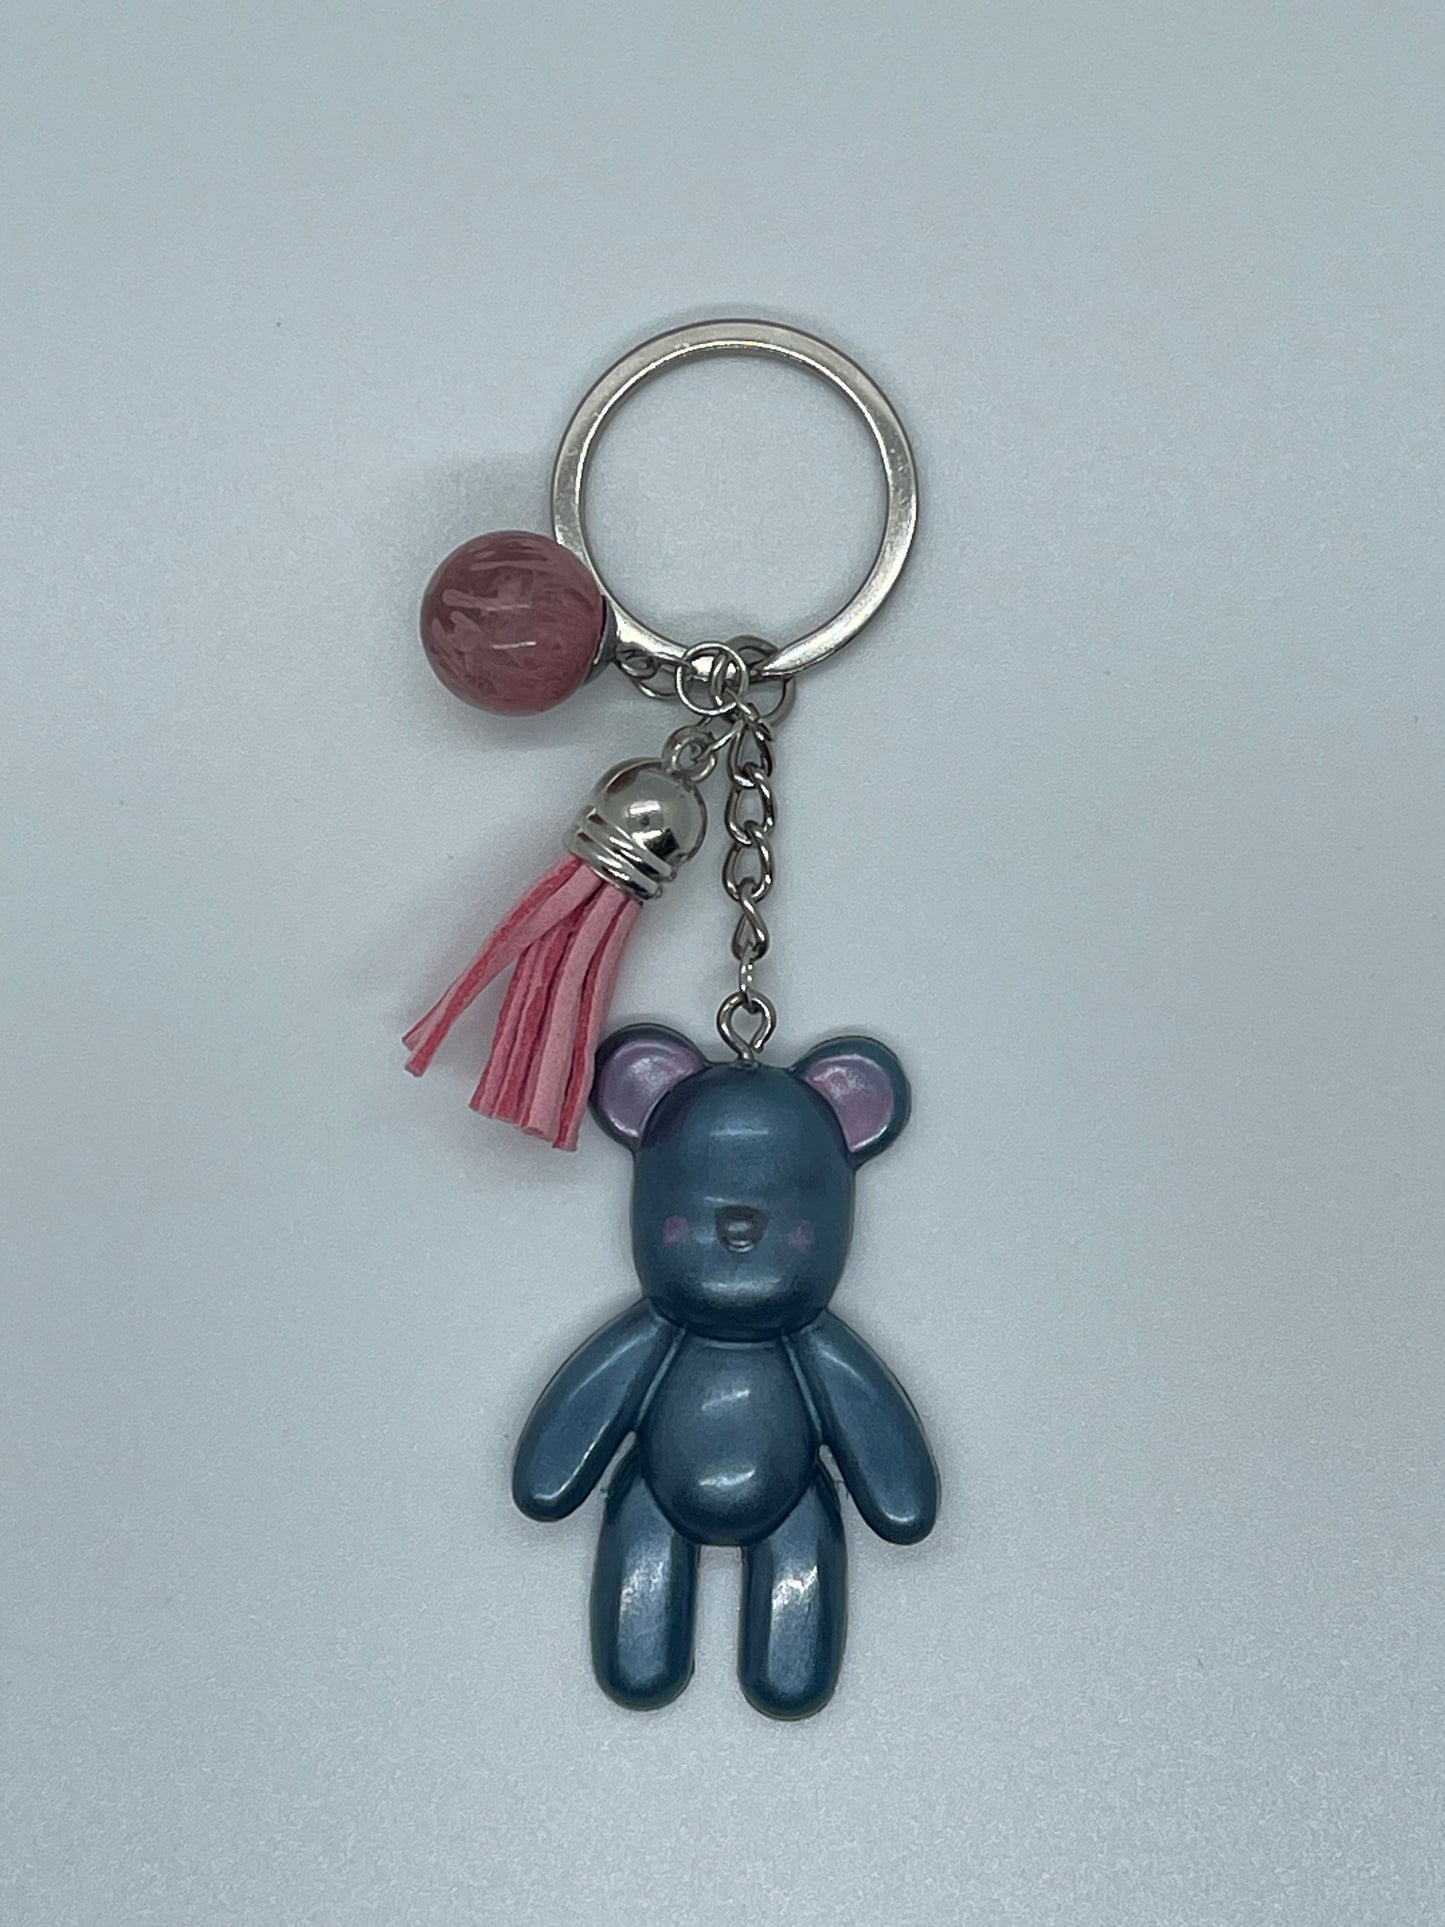 Blue Teddy Bear Keychain with Pink Round Charm